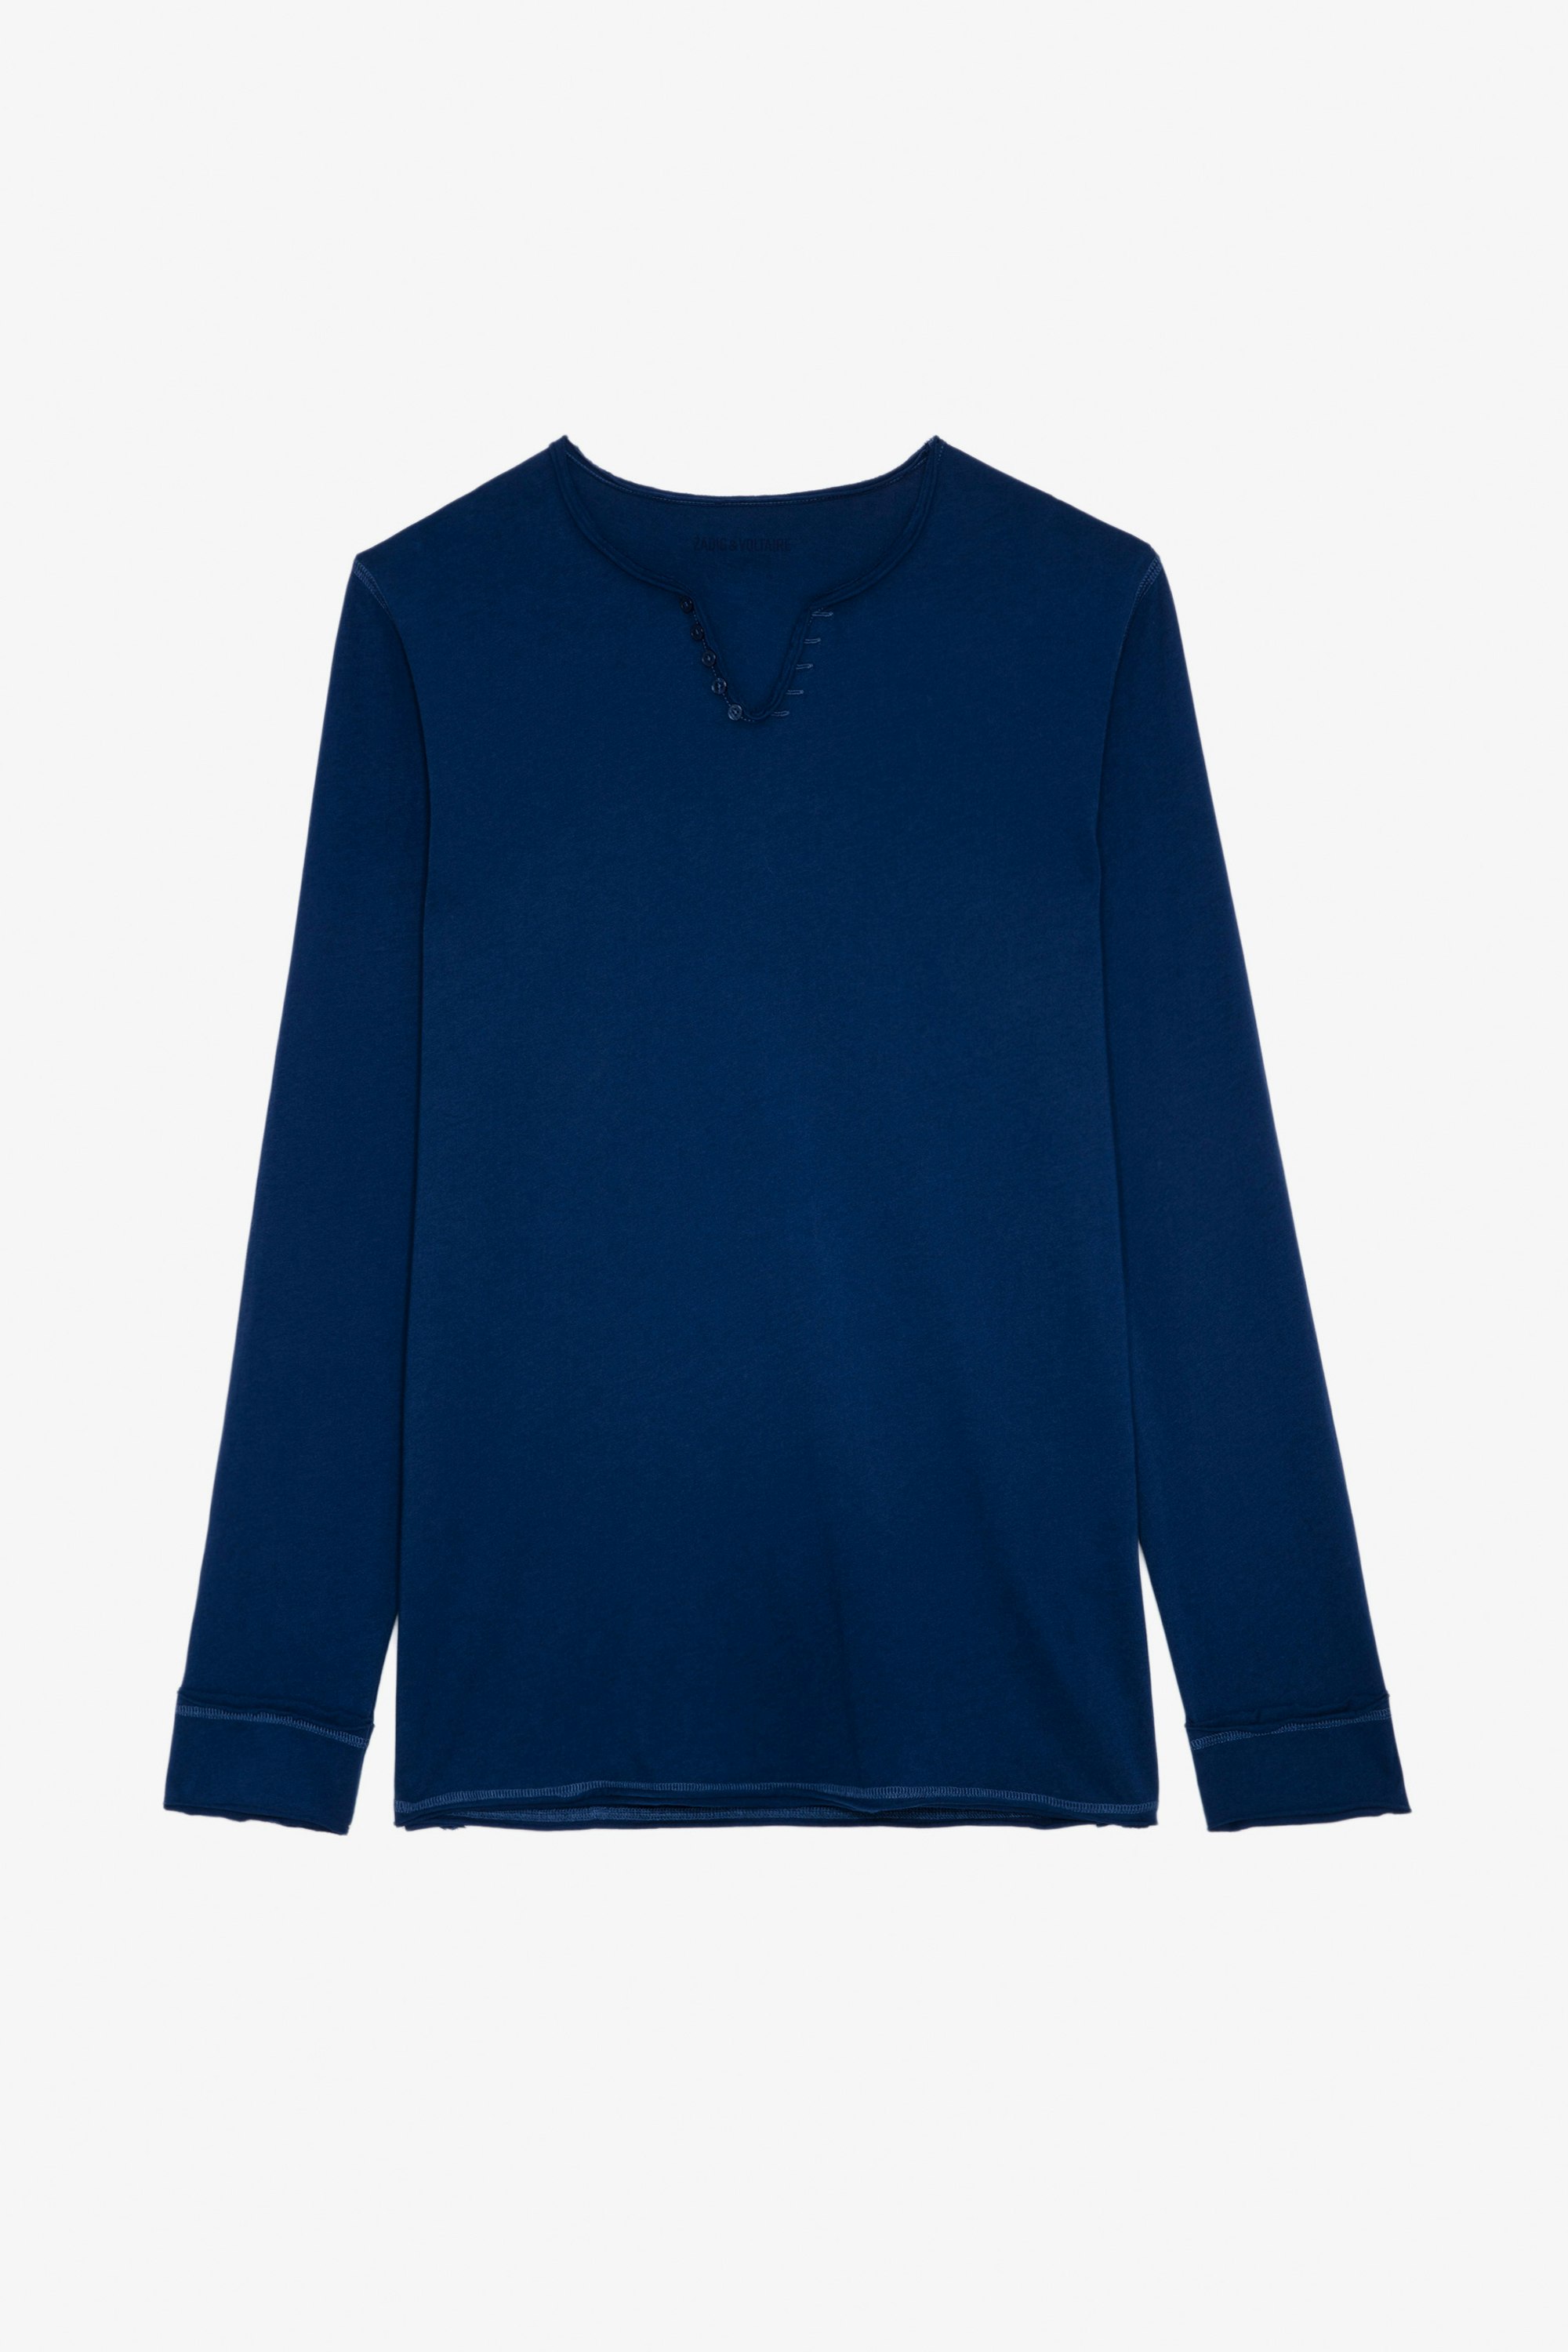 Monastir T-shirt - Men’s royal blue cotton long-sleeved Henley T-shirt.